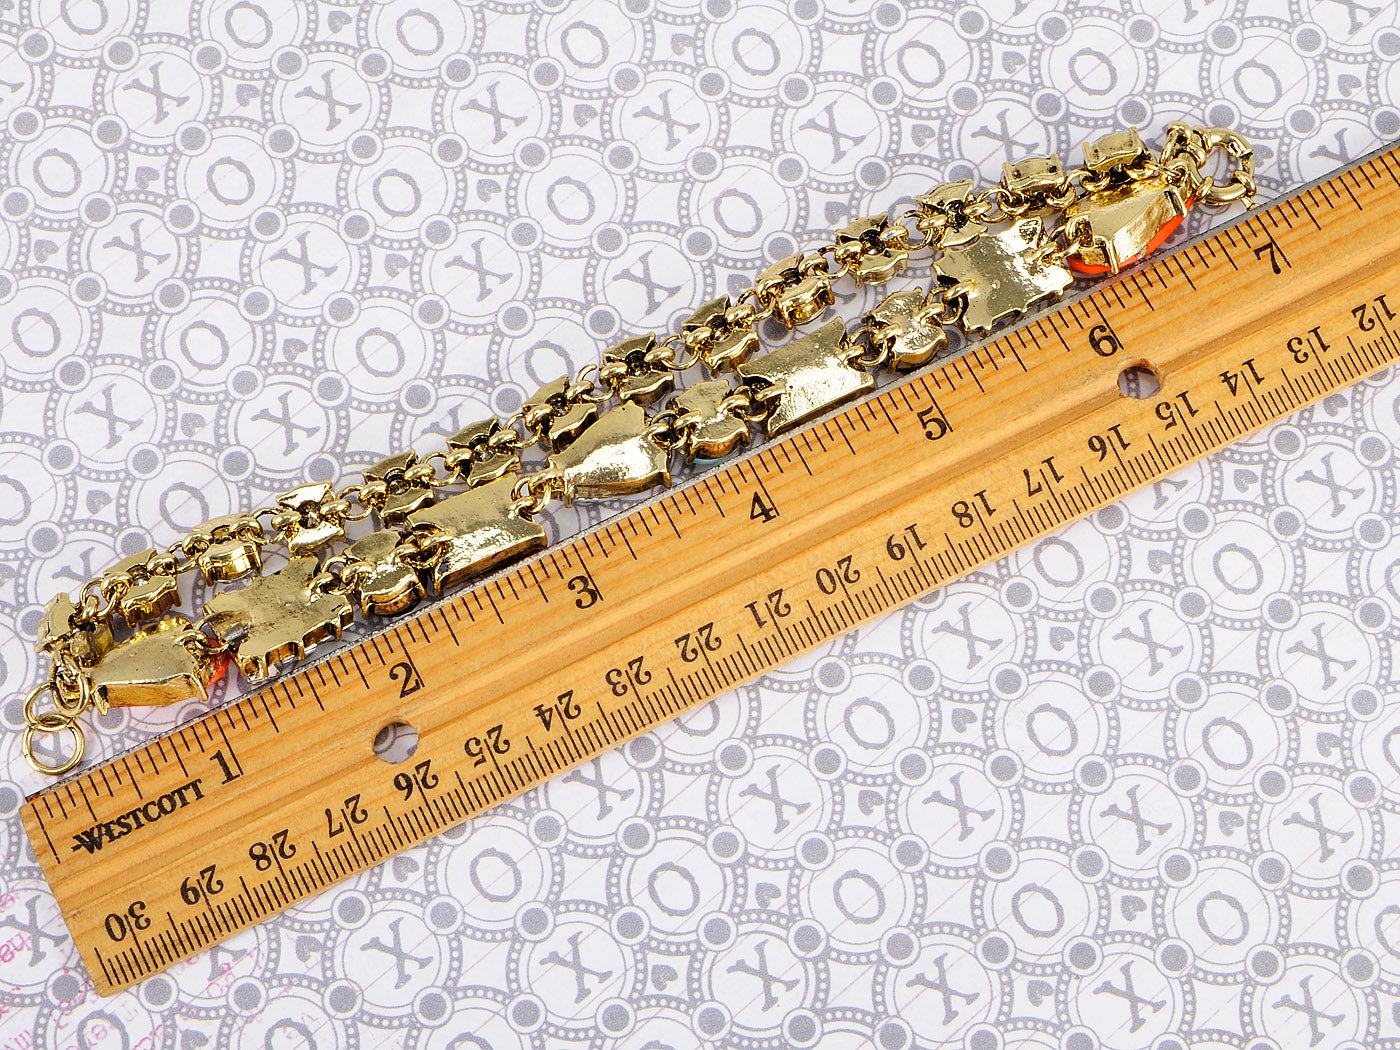 Contemporary Multicoloured Bead White Accented Bracelet